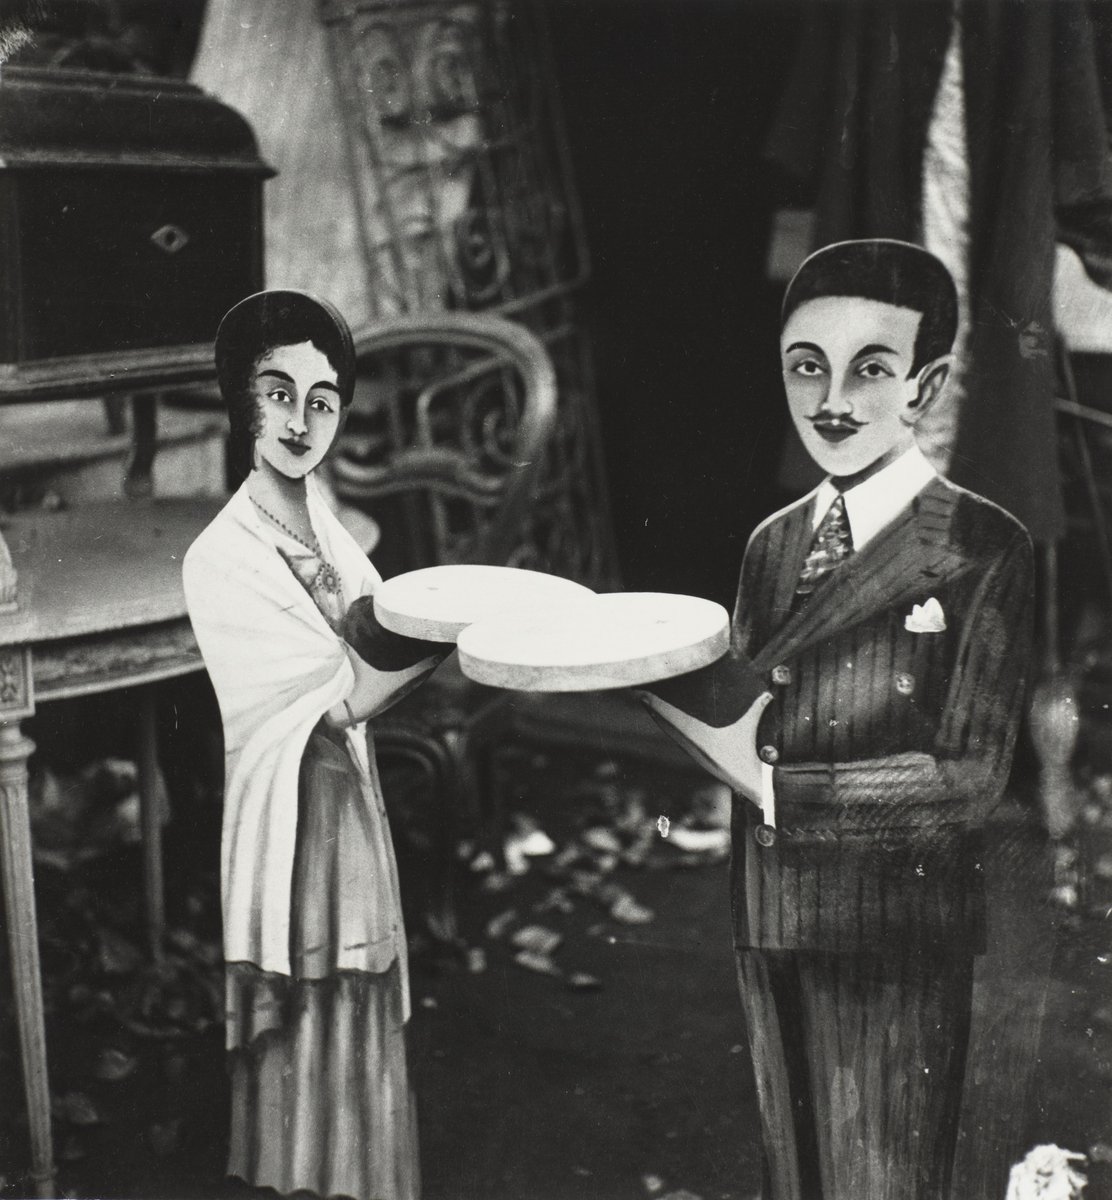 Kati Horna - Figurines (~1933)
#KatiHorna #photography